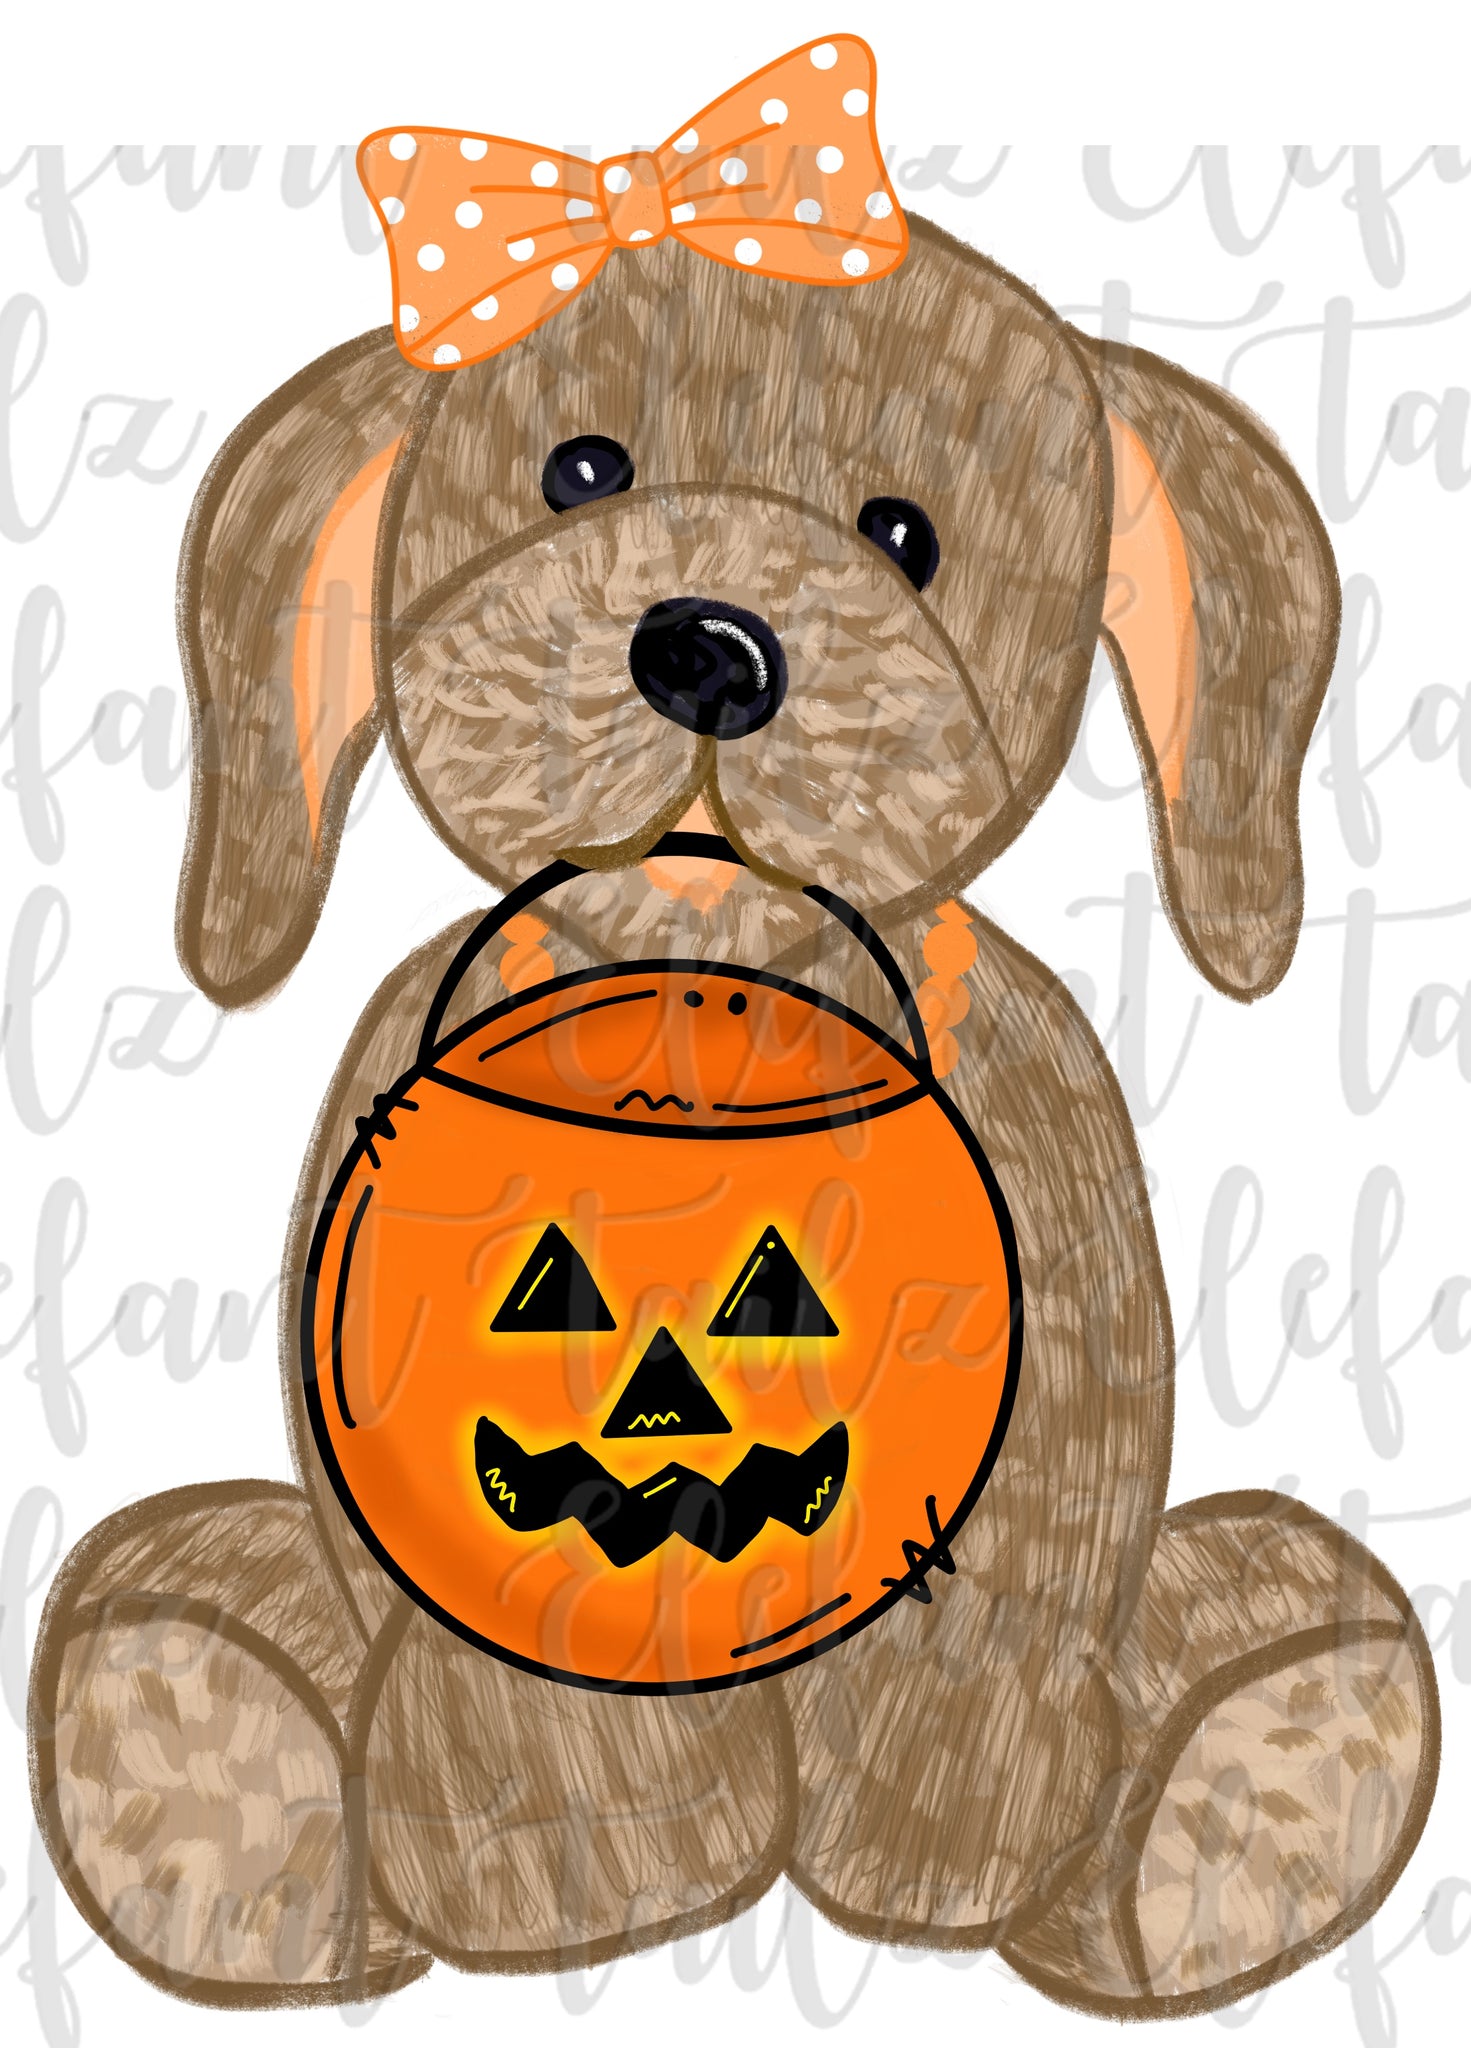 Halloween Girl Puppy - Brown